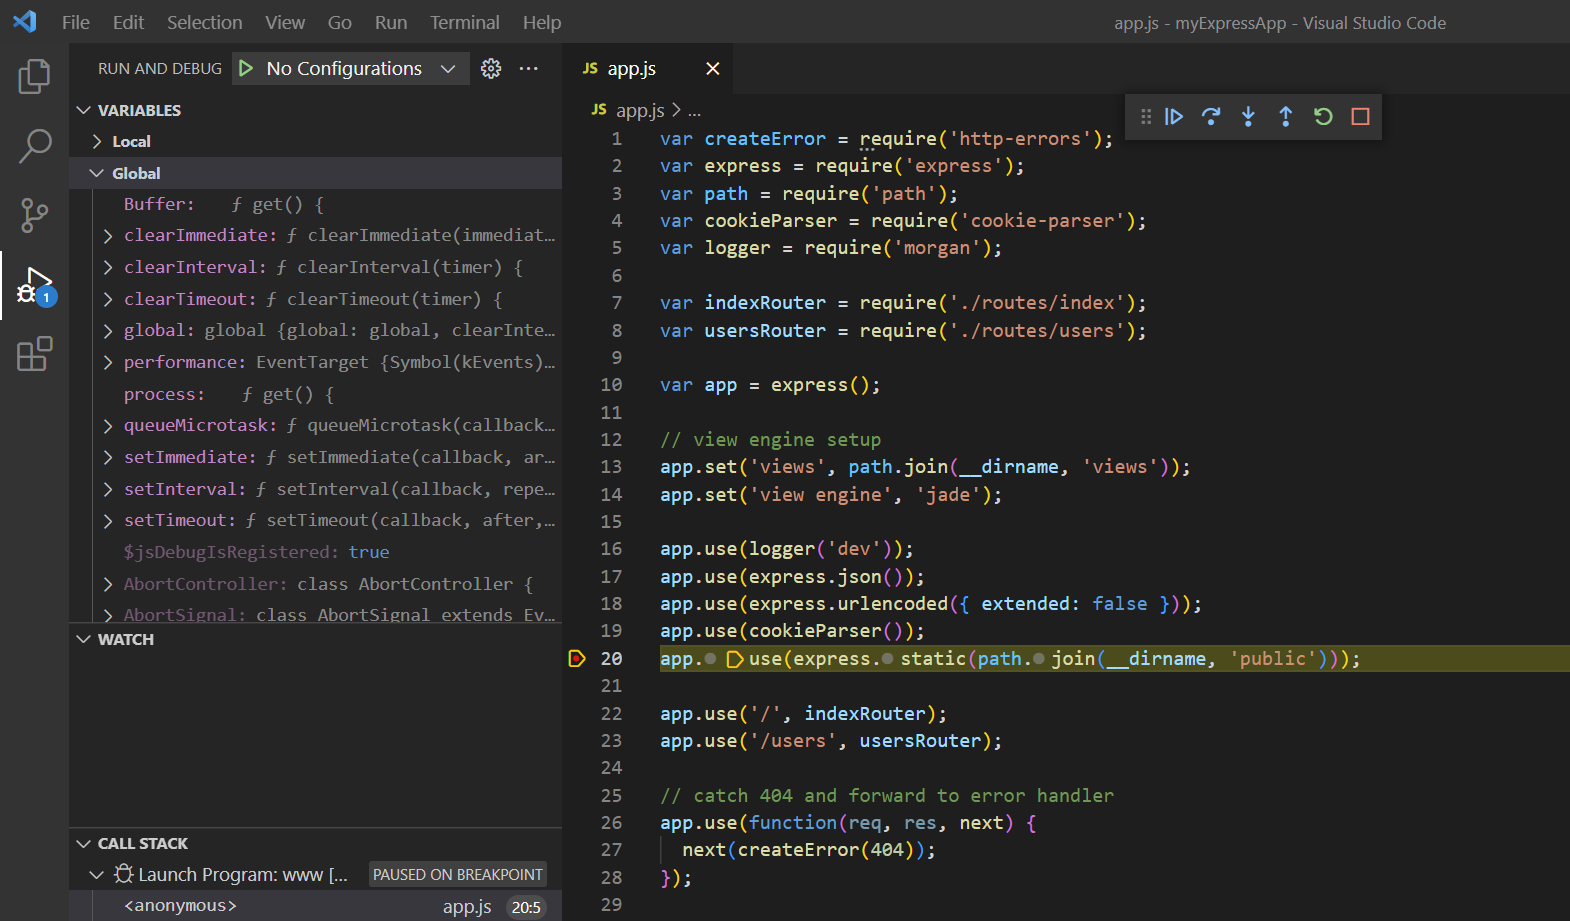 Screenshot of Visual Studio Code in debug mode with Debug Toolbar visible.